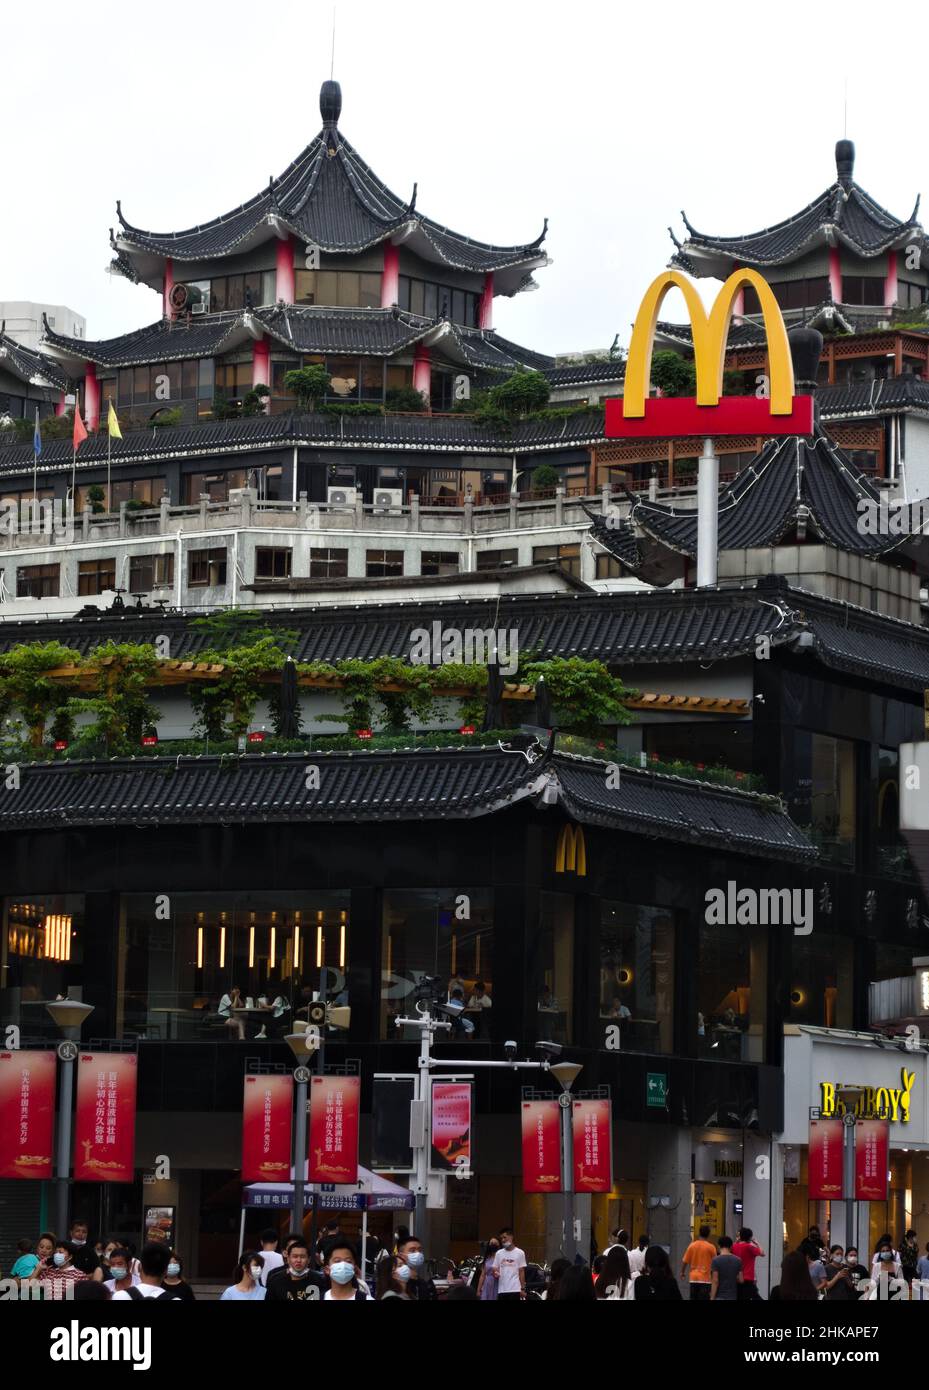 McDonald's logo seen among Chinese pagodas in Shenzhen, China Stock Photo